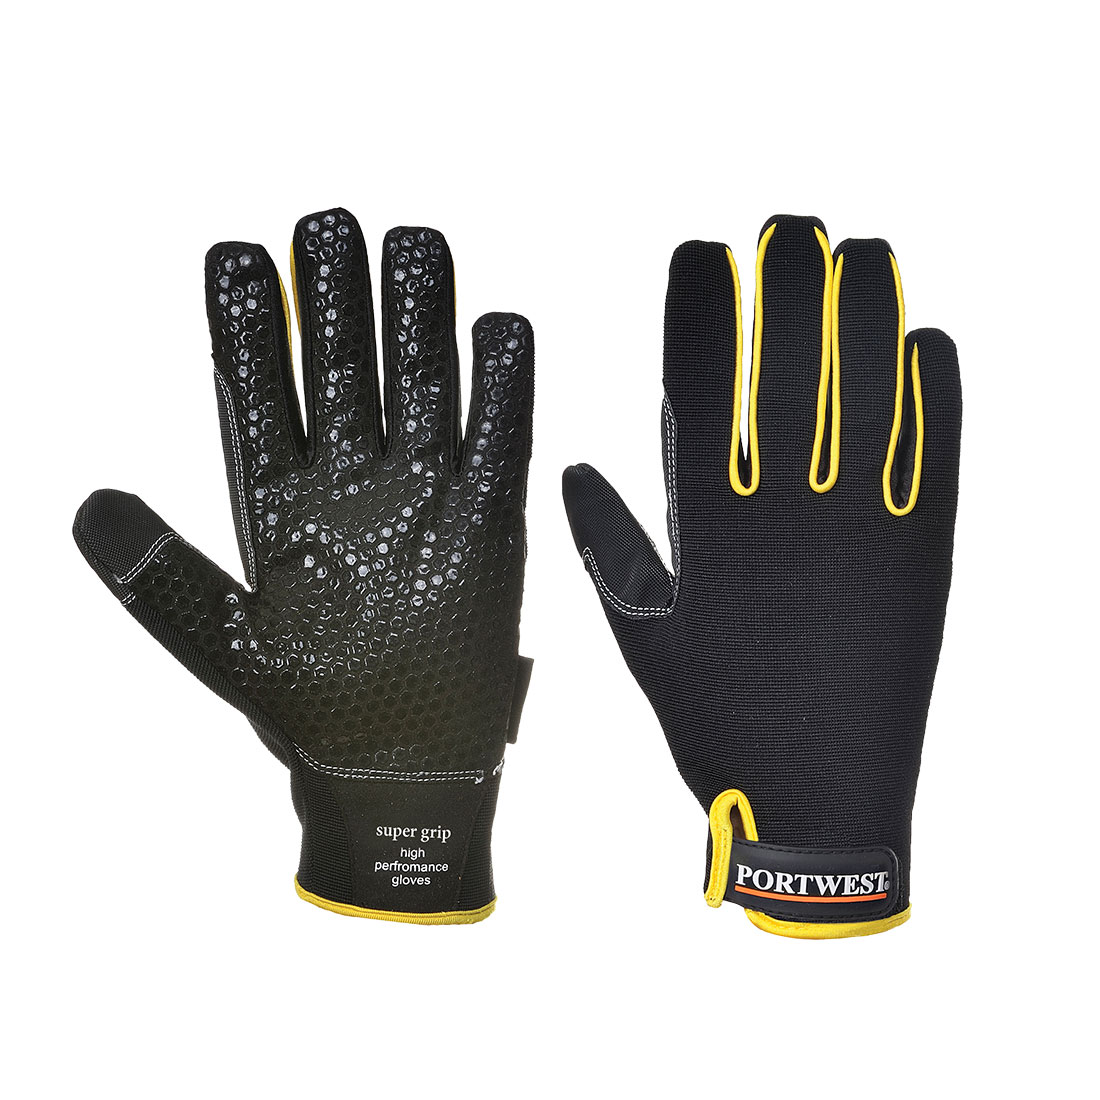 A730 Portwest® Supergrip High Performance Mechanic Gloves